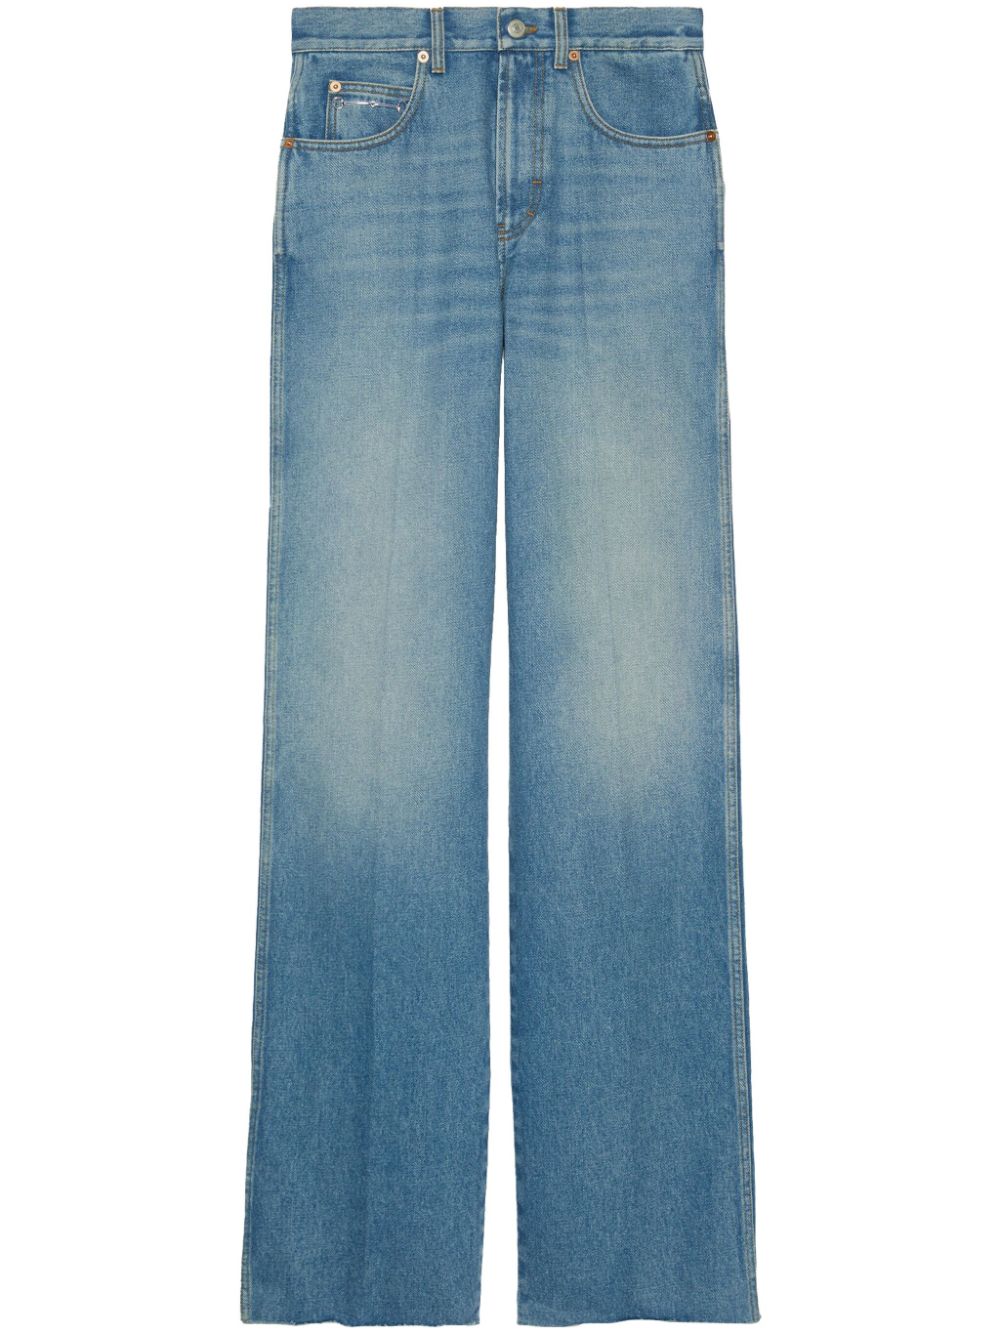 GUCCI Contemporary Stonewashed Wide-Leg Cotton Denim Jeans for Women